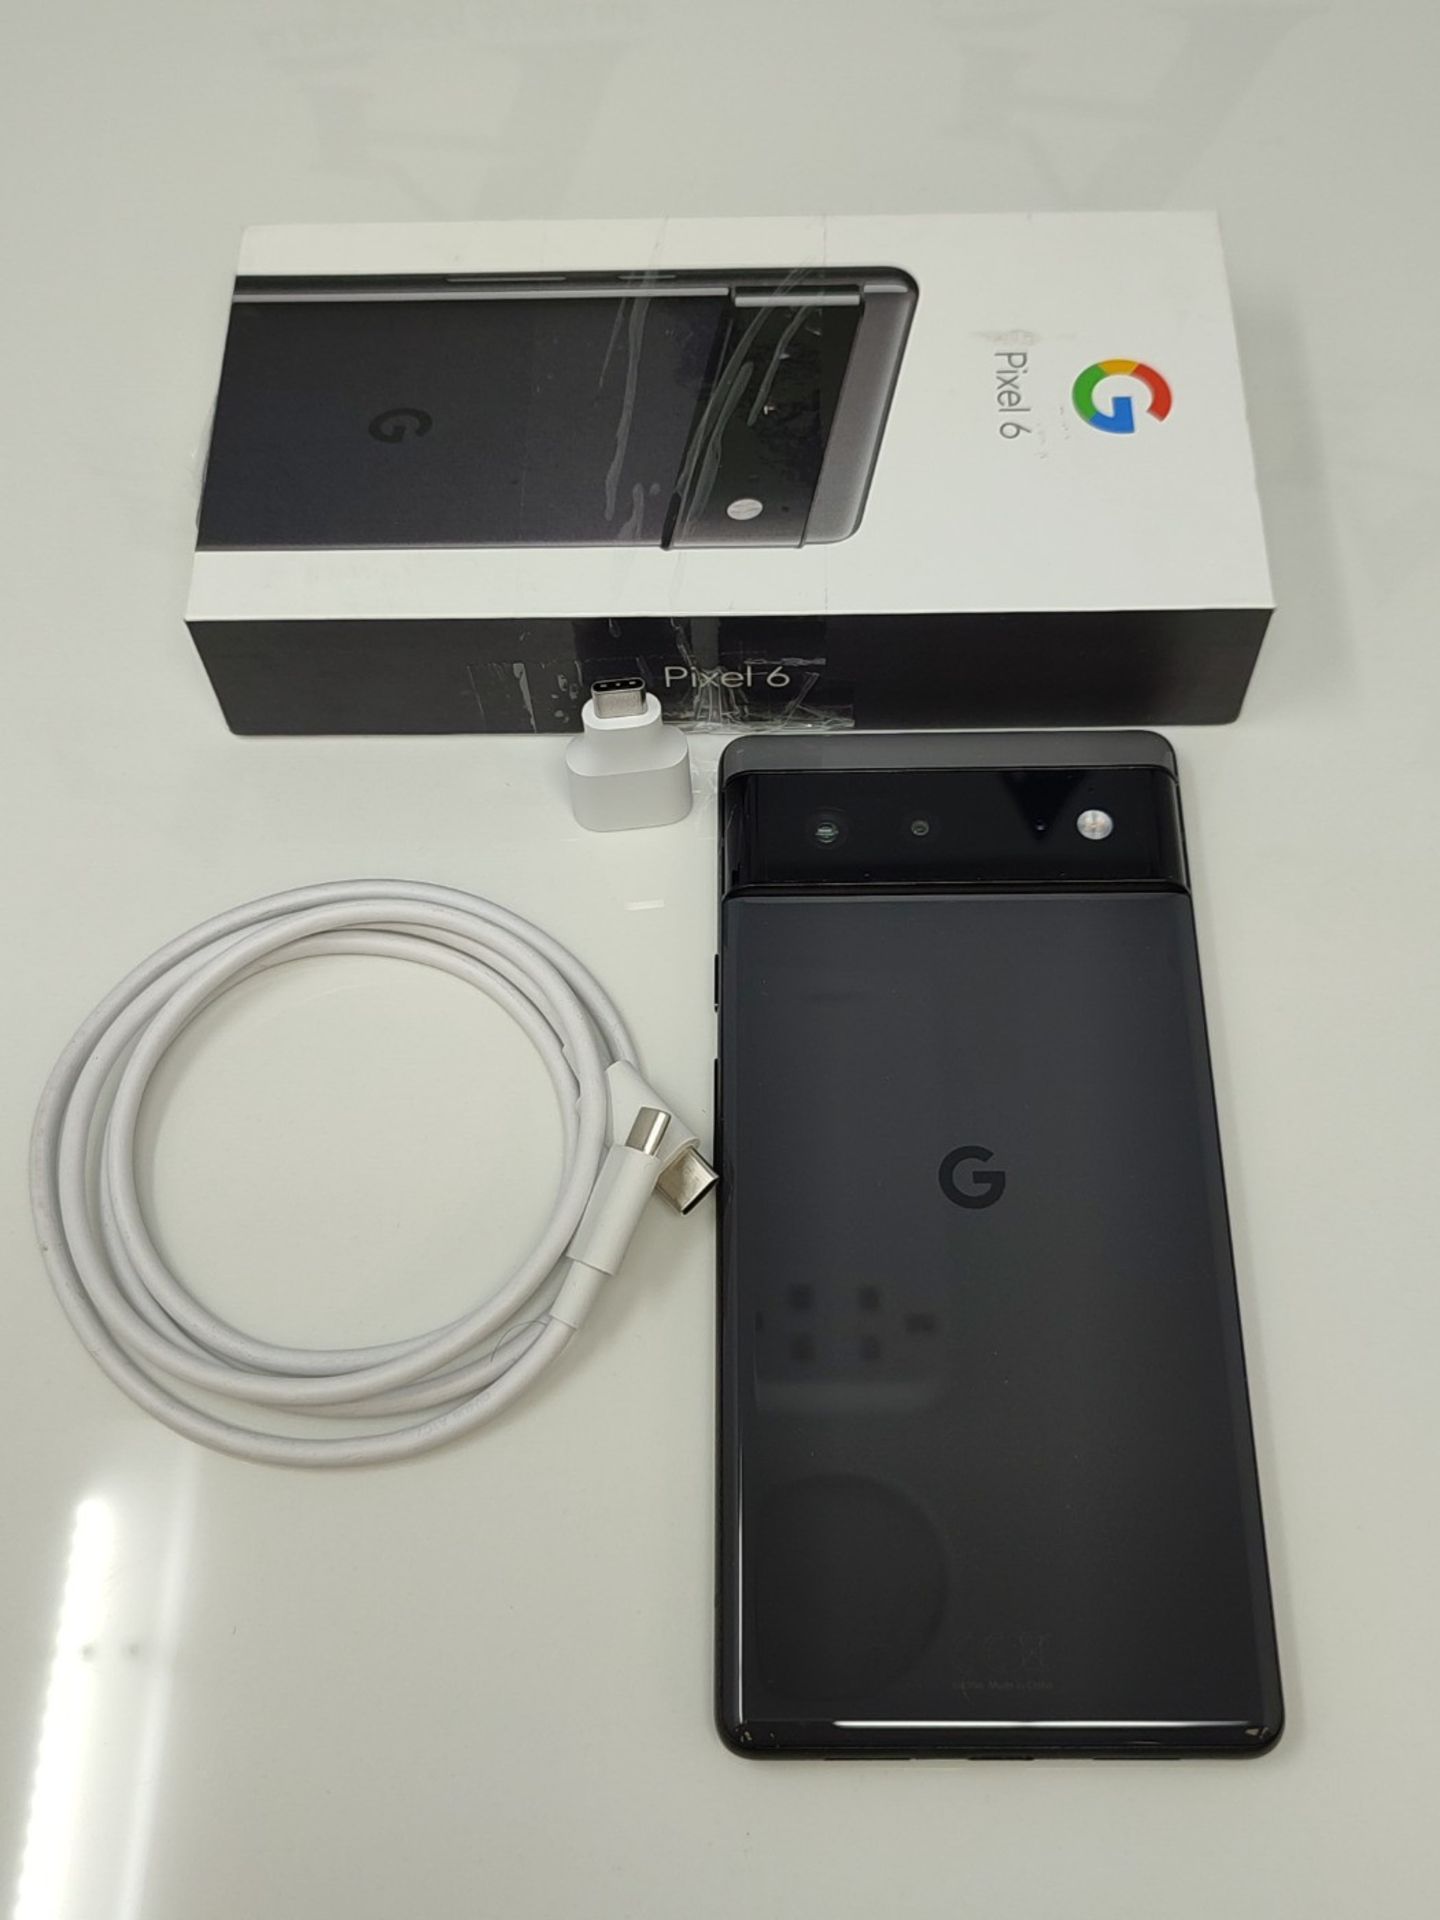 RRP £592.00 Google Pixel 6  Android 5G Smartphone with 50 Megapixel Camera and Wide-Angle Lens - Image 3 of 3